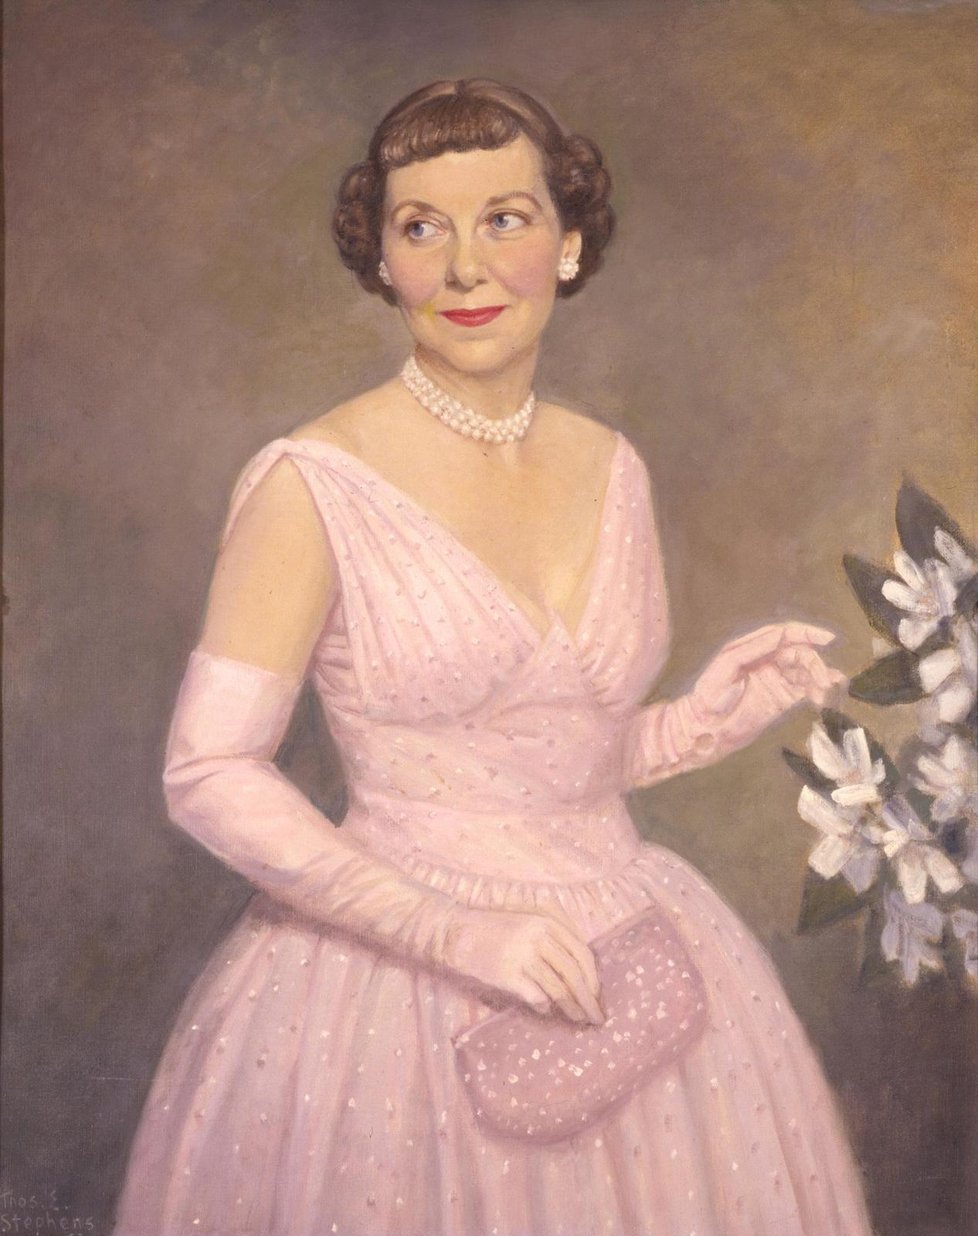 Mamie Eisenhowerová v jejich proslulých růžových šatech.